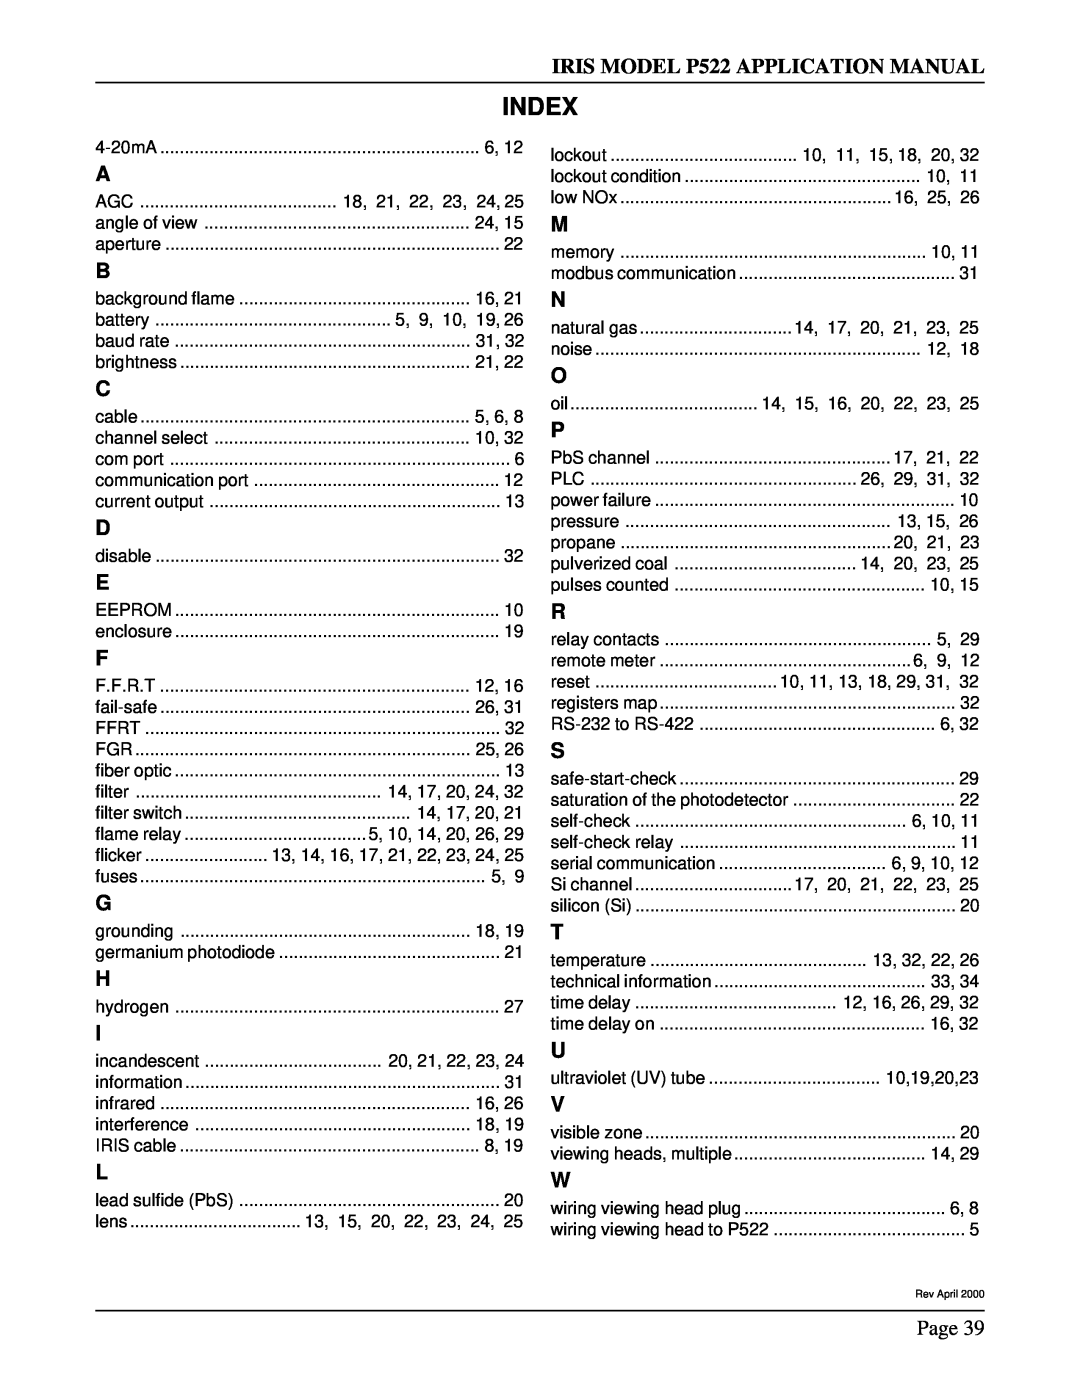 IRIS manual Index, IRIS MODEL P522 APPLICATION MANUAL 